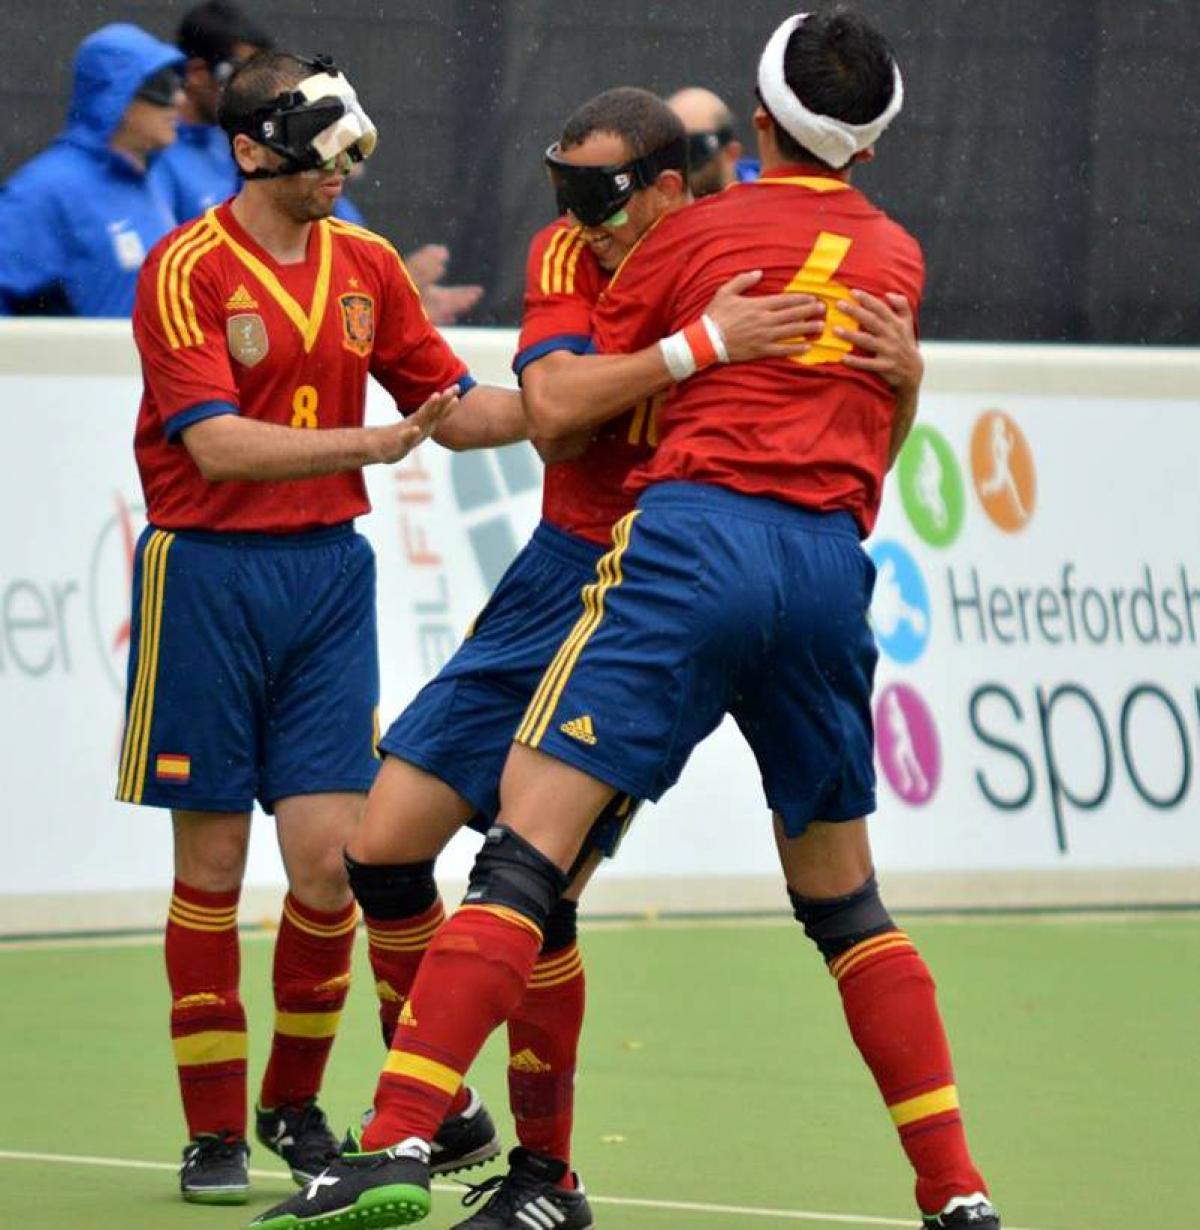 Spanish players celebrate a goal.